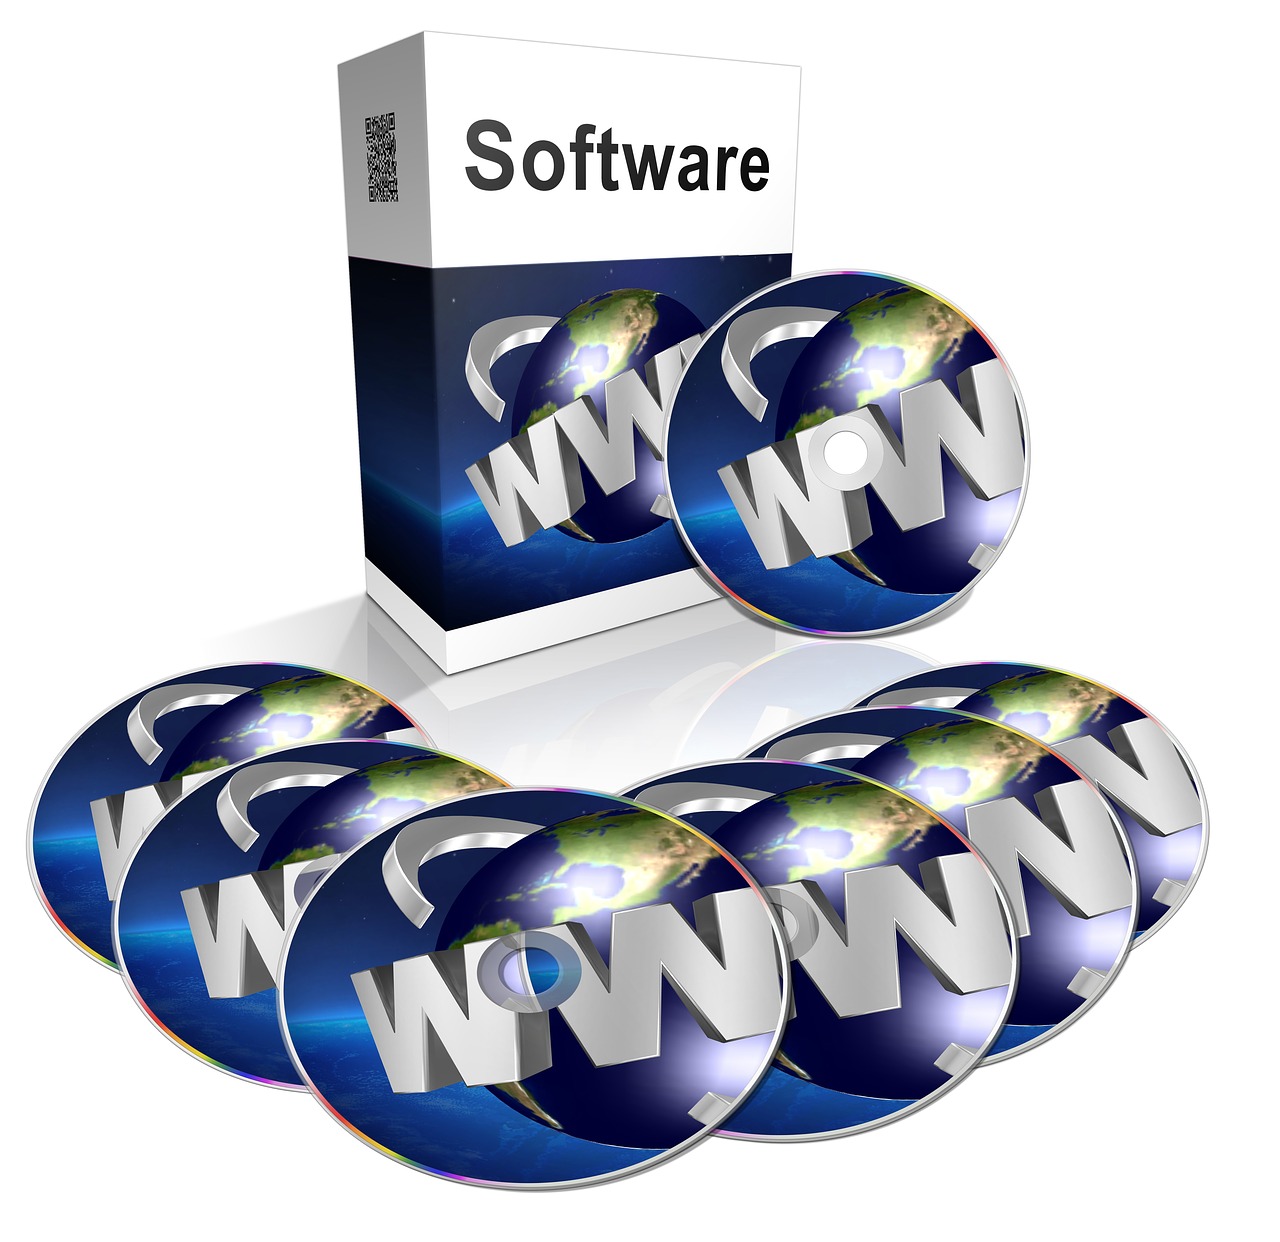 software cd software box free photo